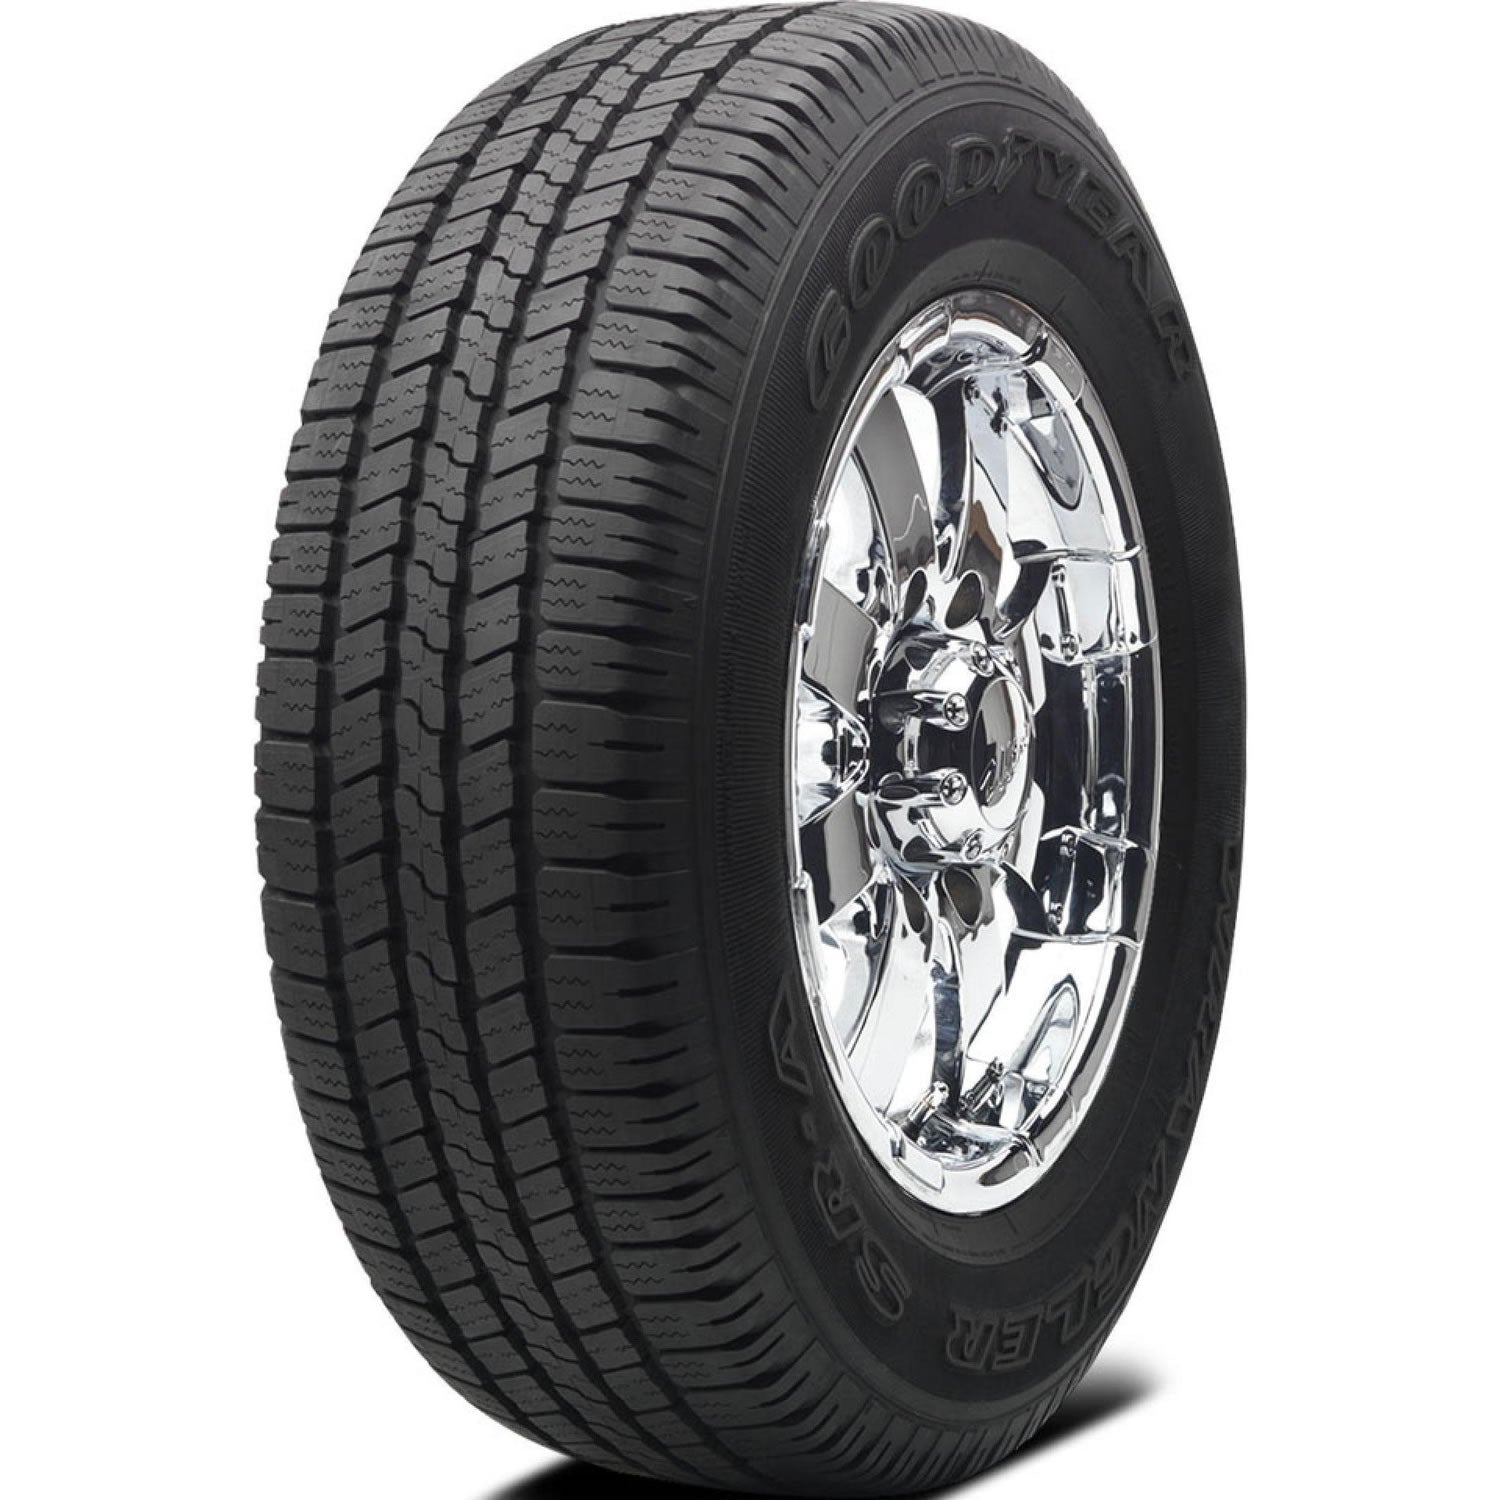 GOODYEAR WRANGLER SR-A P215/75R15 (27.7X8.5R 15) Tires